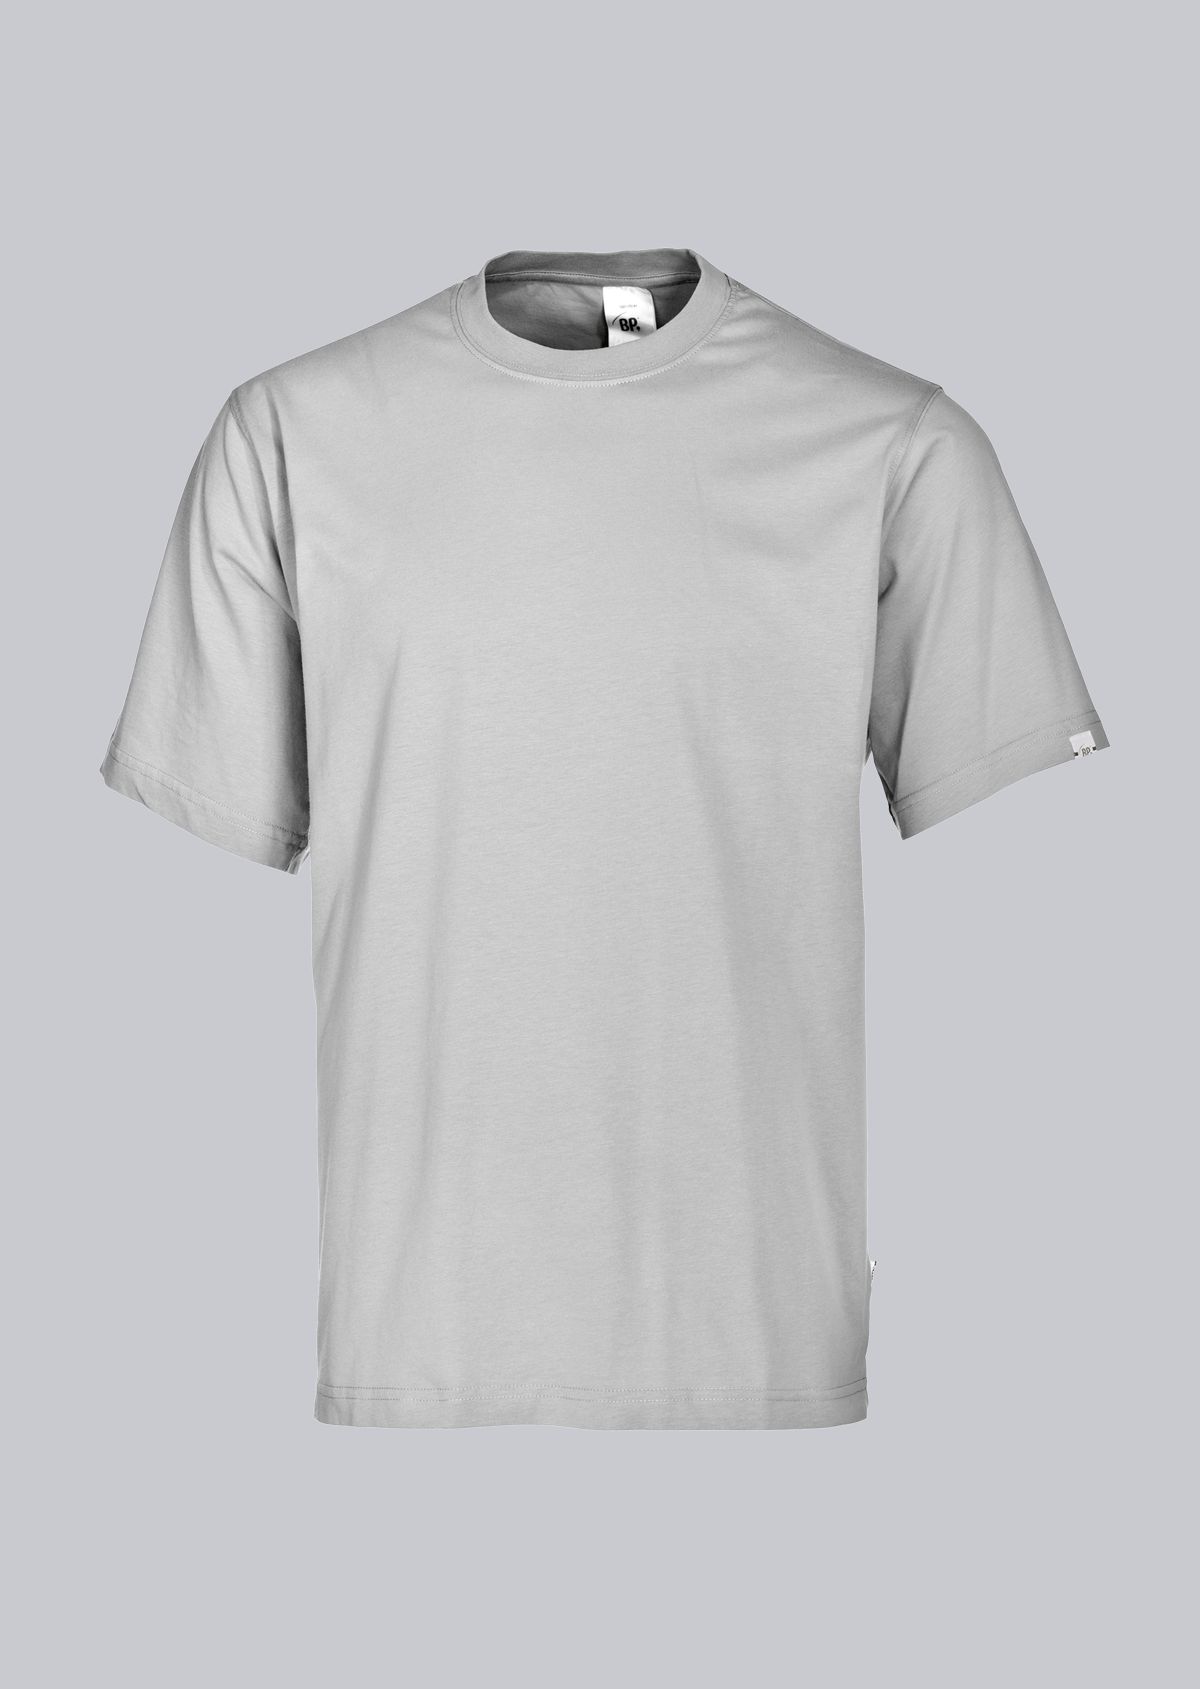 BP® Unisex T-shirt